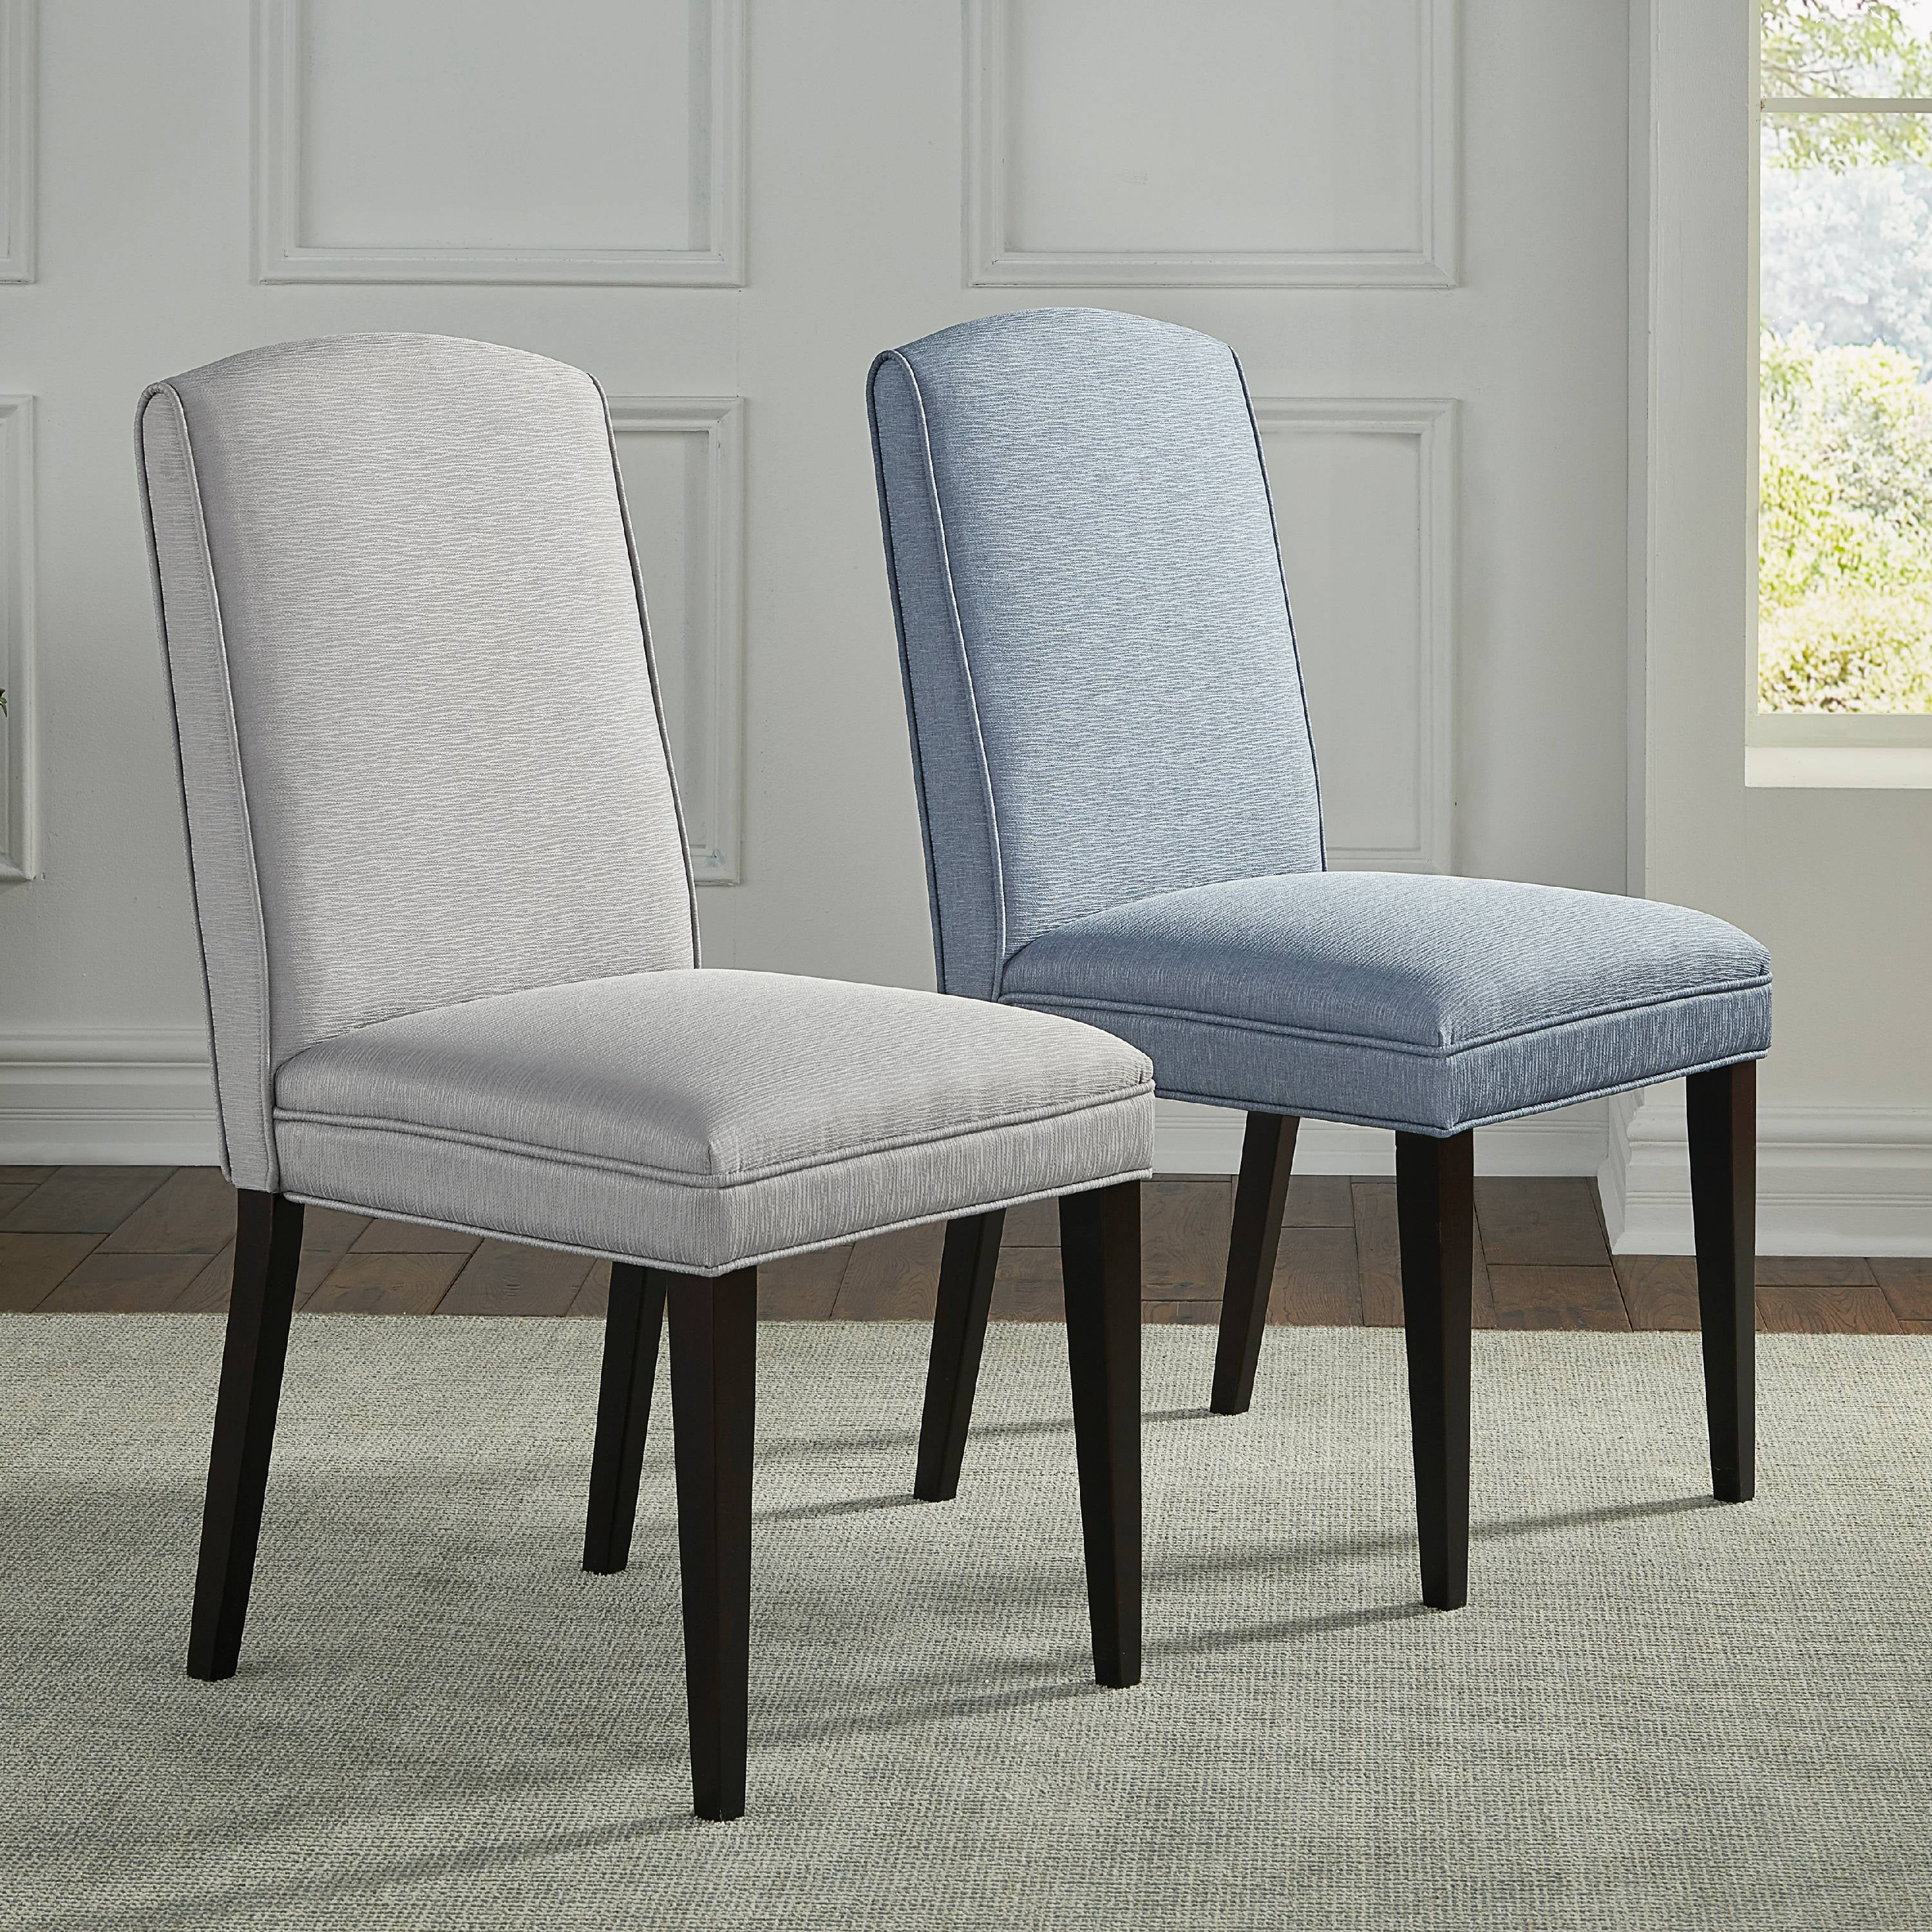 Homefare Sleek Upholstered Dining Chair In Soft Blue